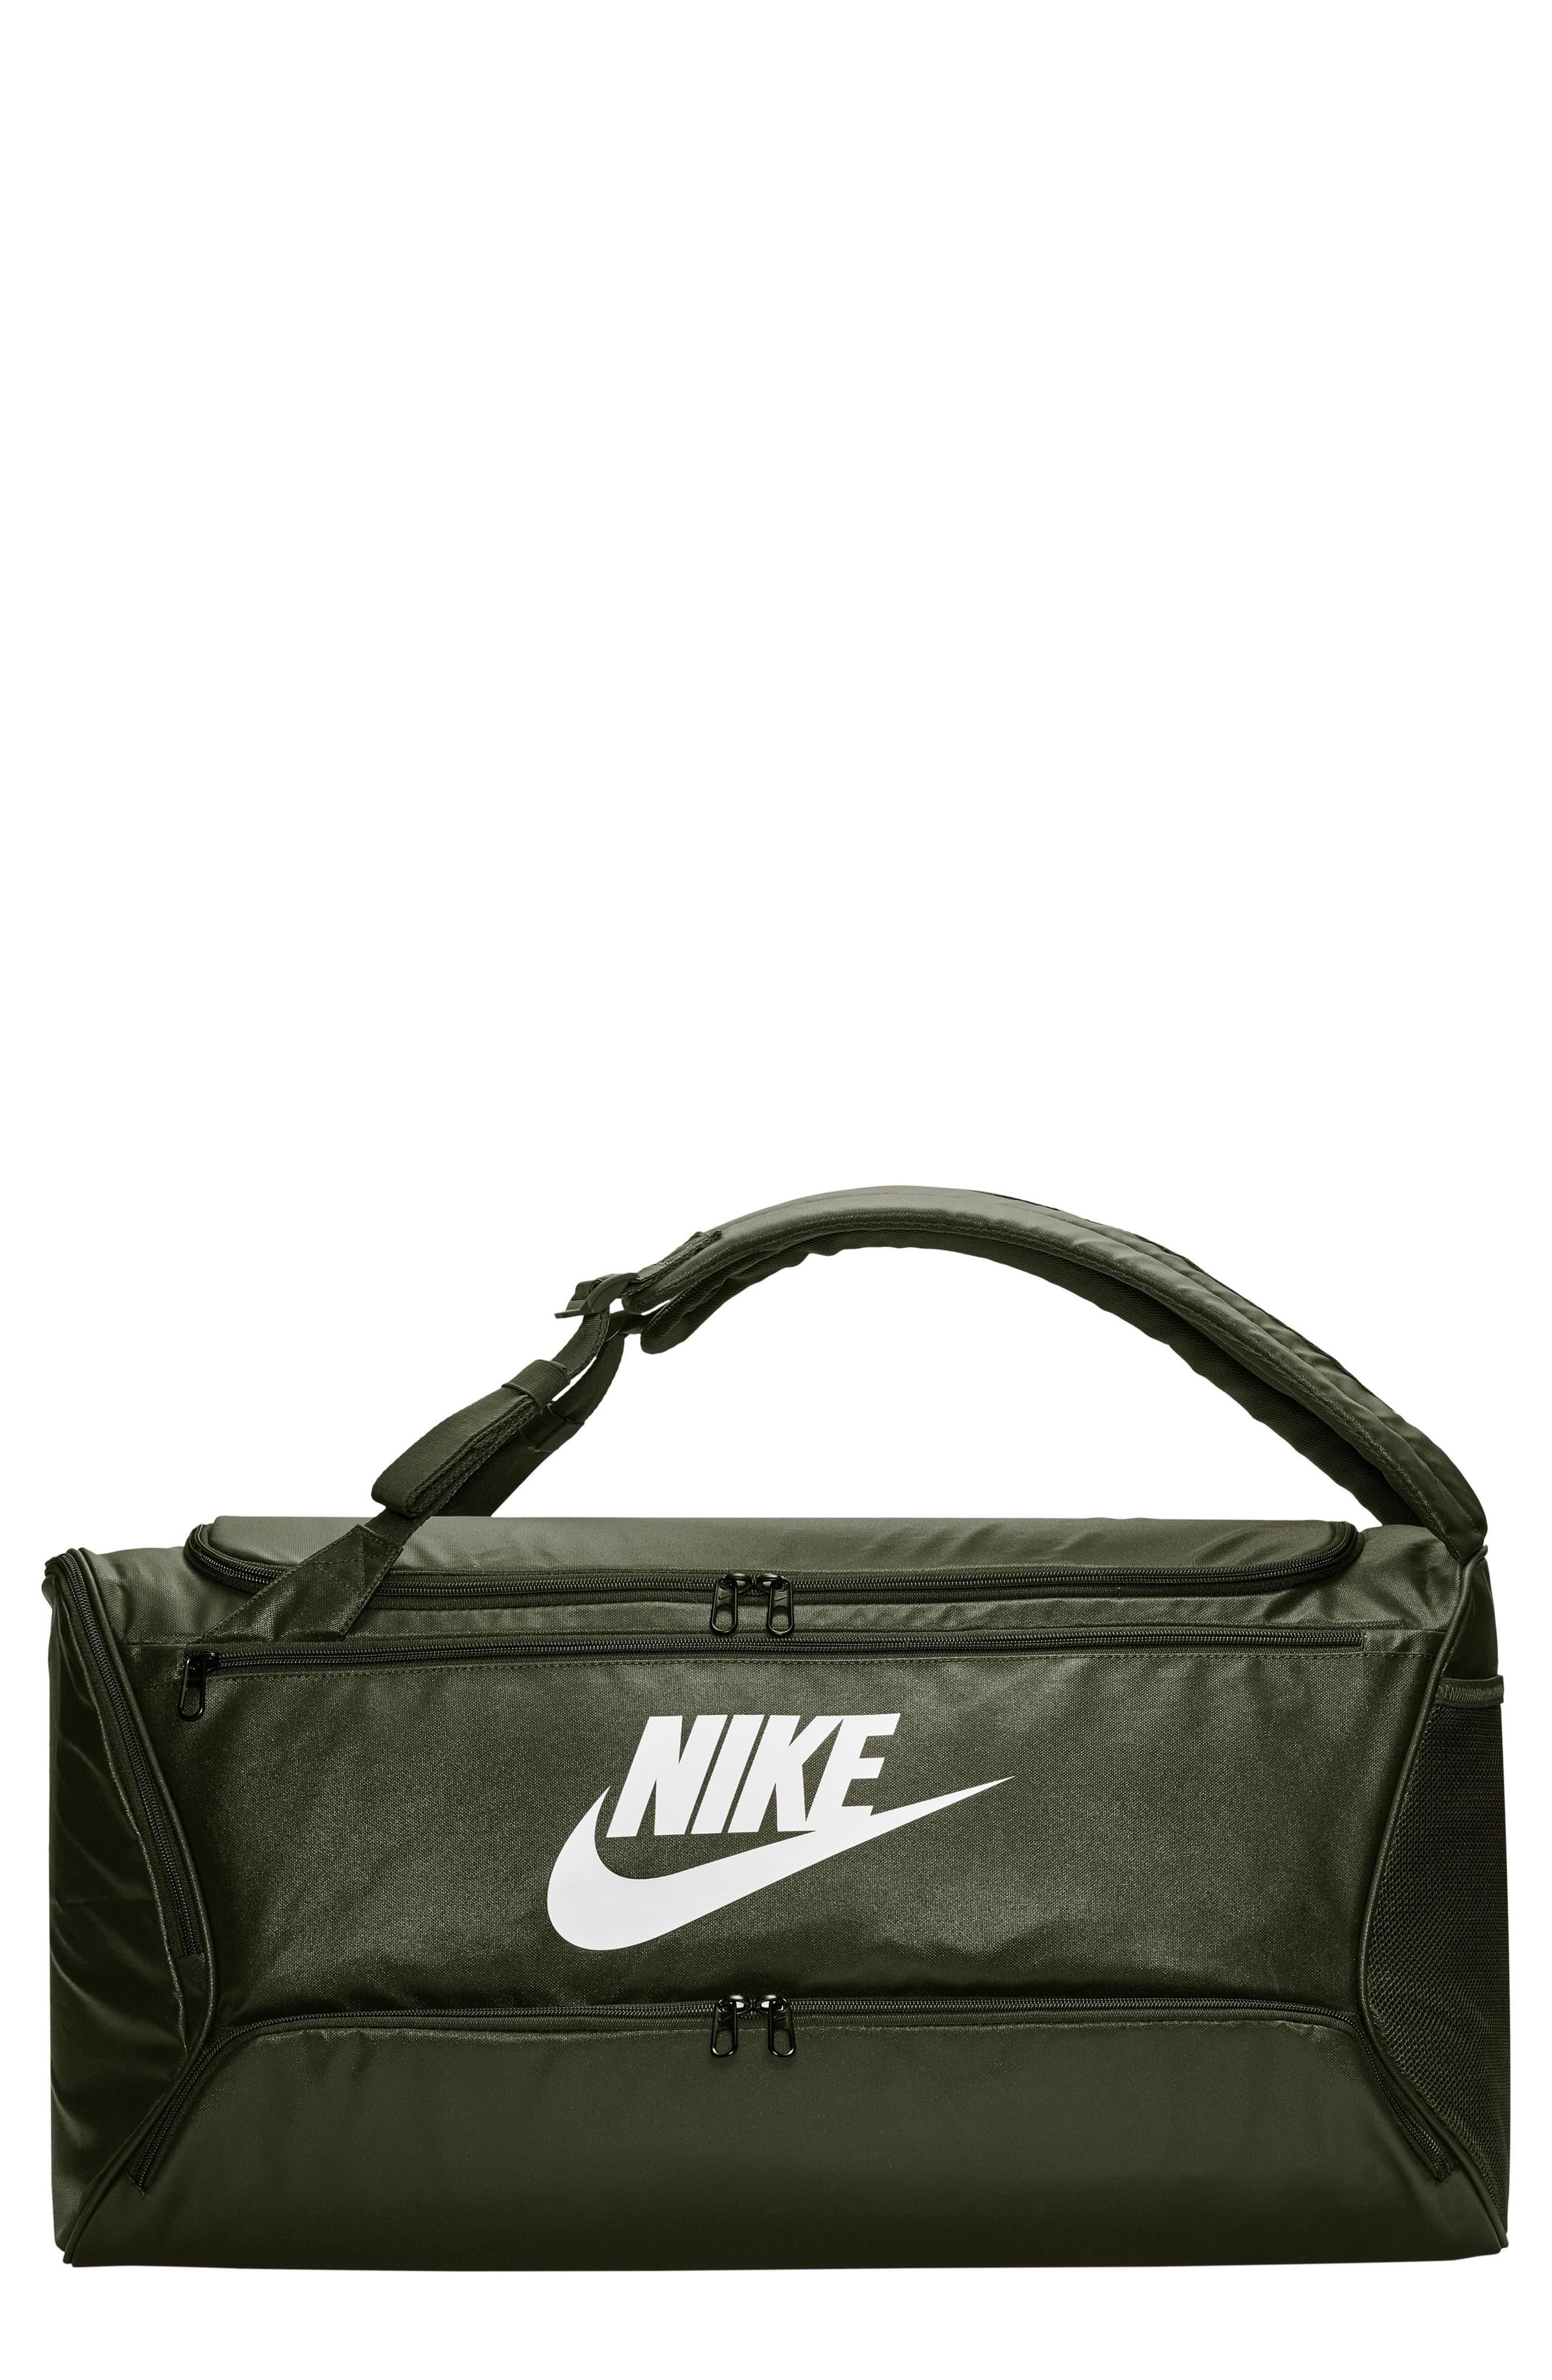 Minhshop.vn - Túi Nike Academy Team Football Duffel Bag Medium Black  [CU8090 010]